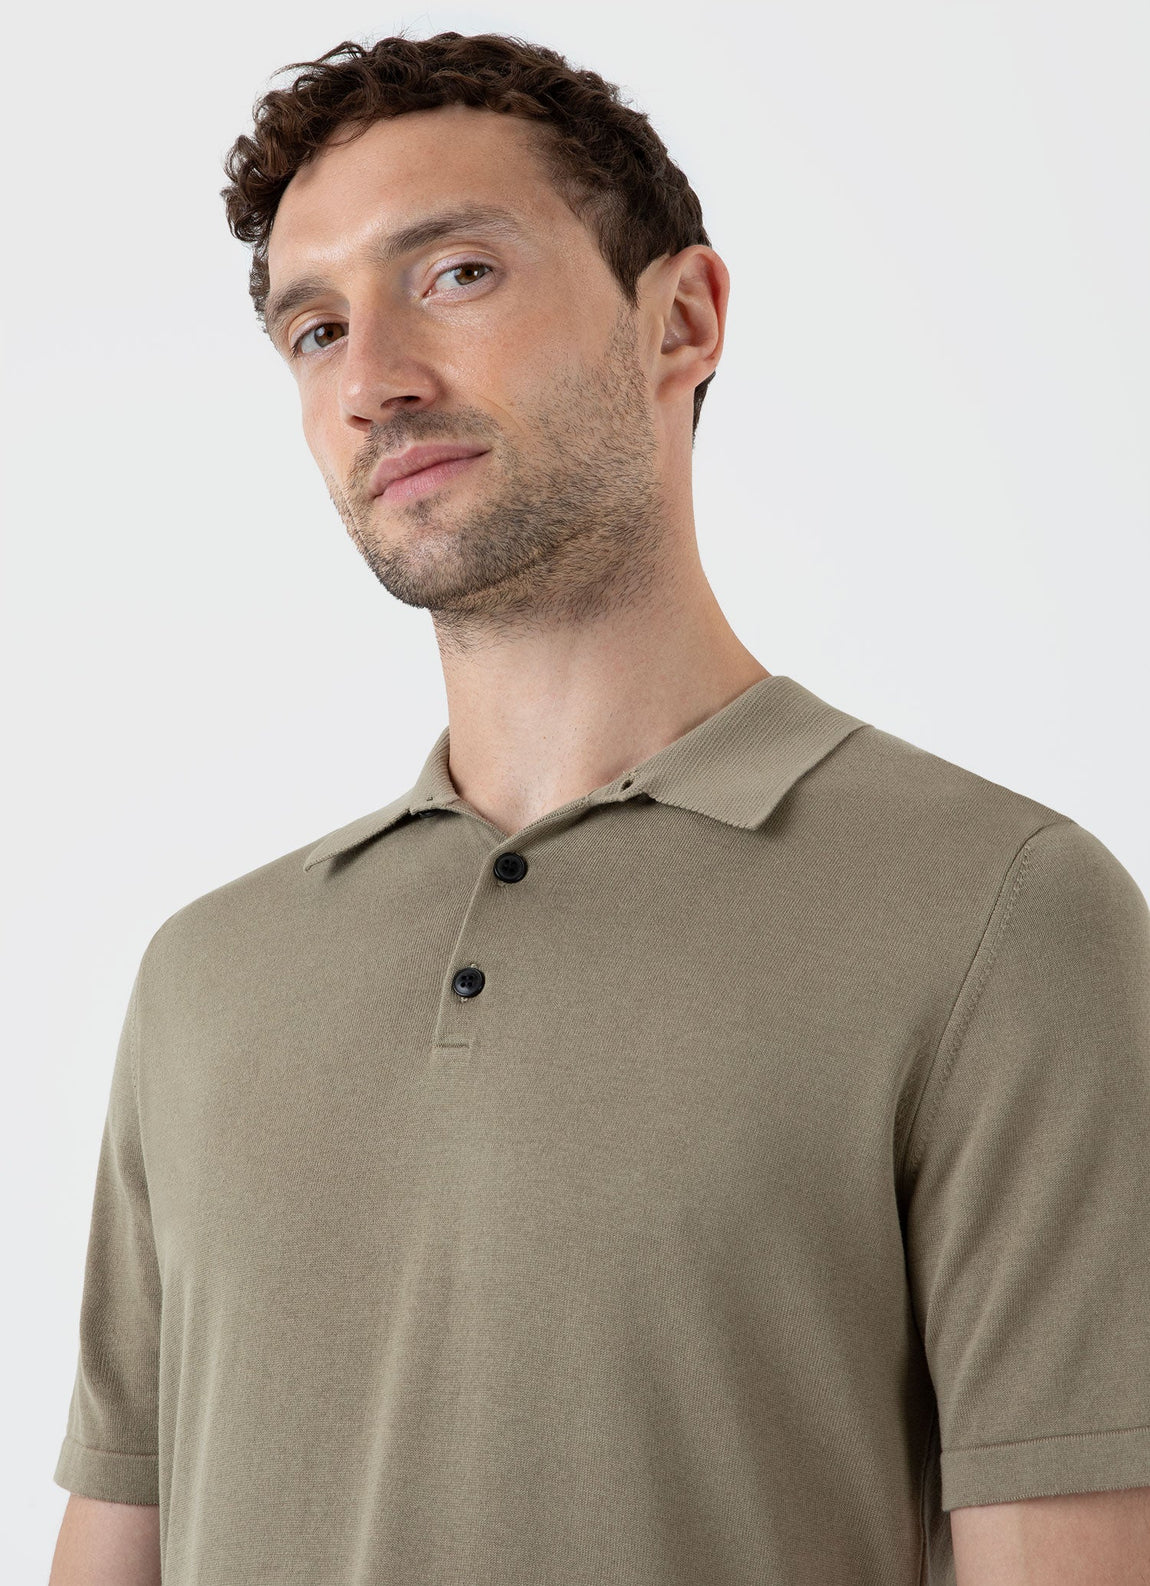 Men's Sea Island Cotton Polo Shirt in Dark Stone | Sunspel